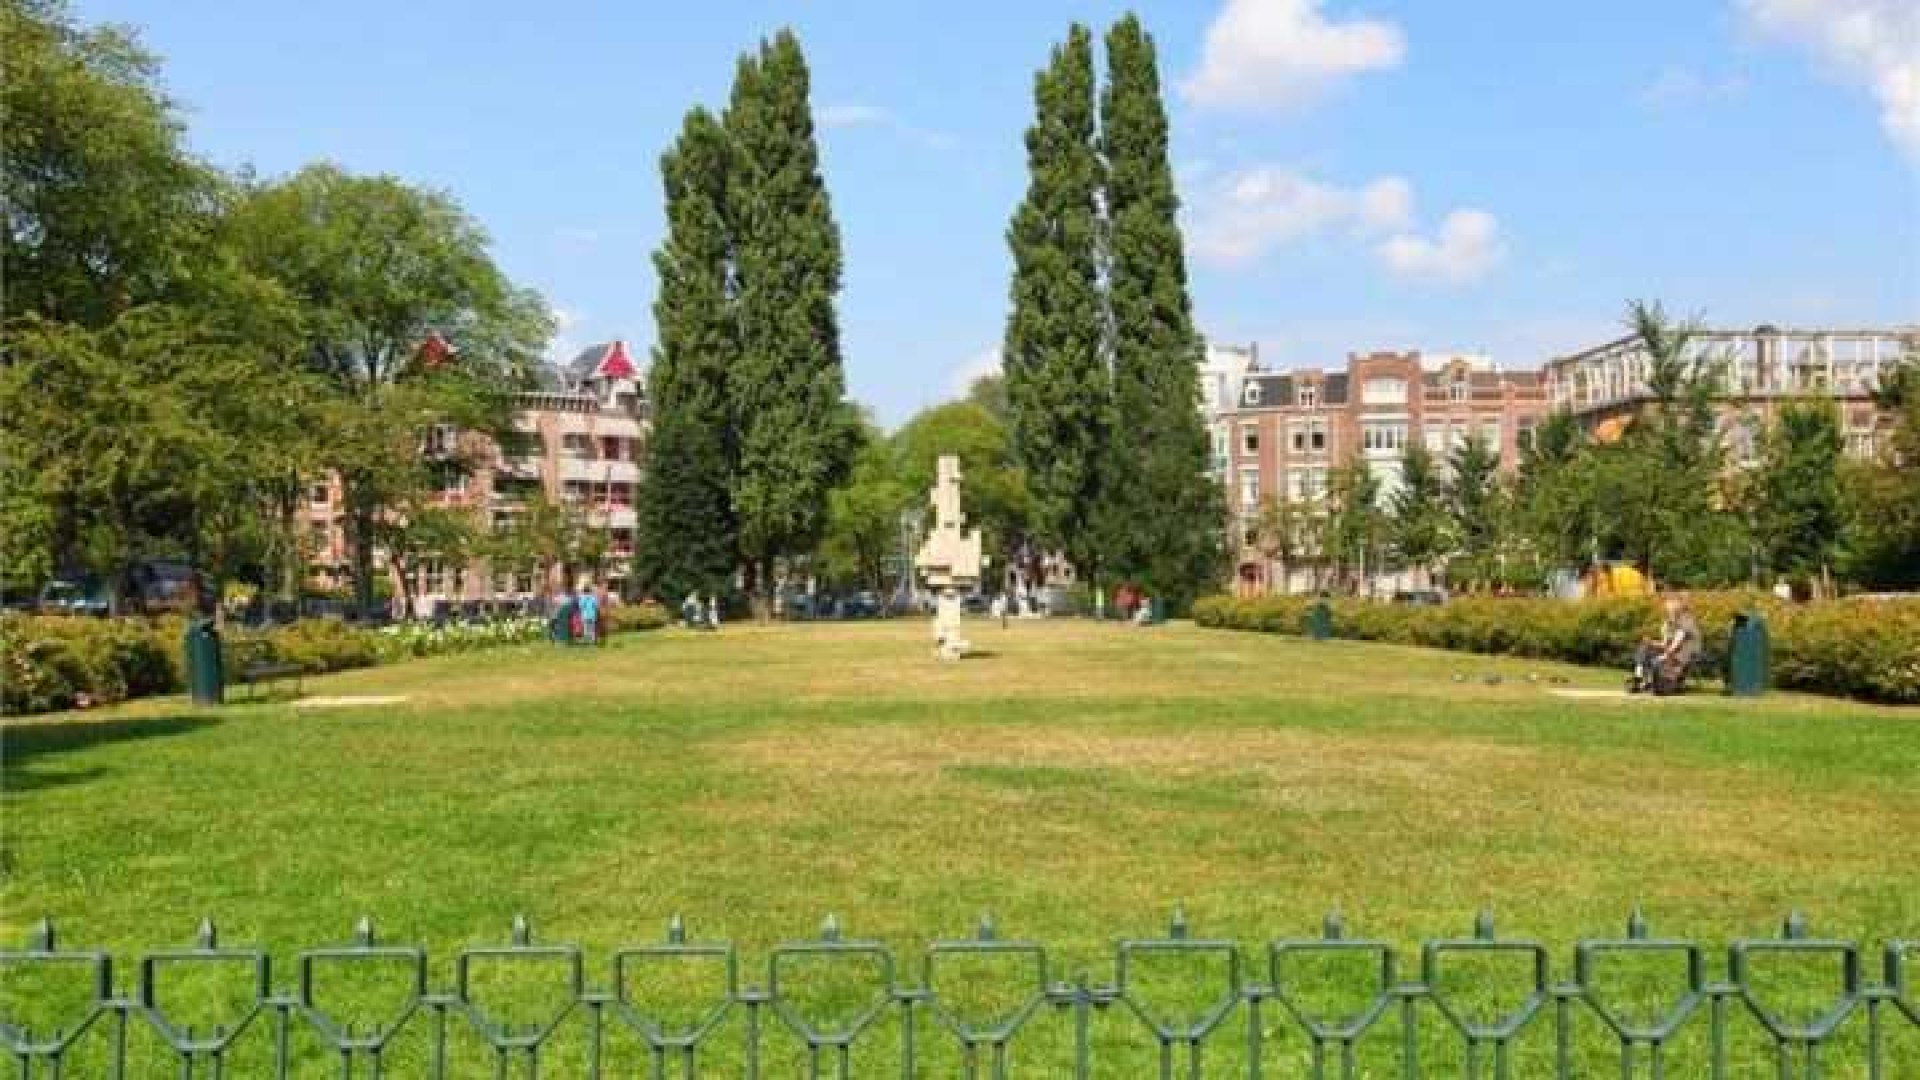 Caro Emerald koopt statig pand in Amsterdam Zuid. Zie foto's 22